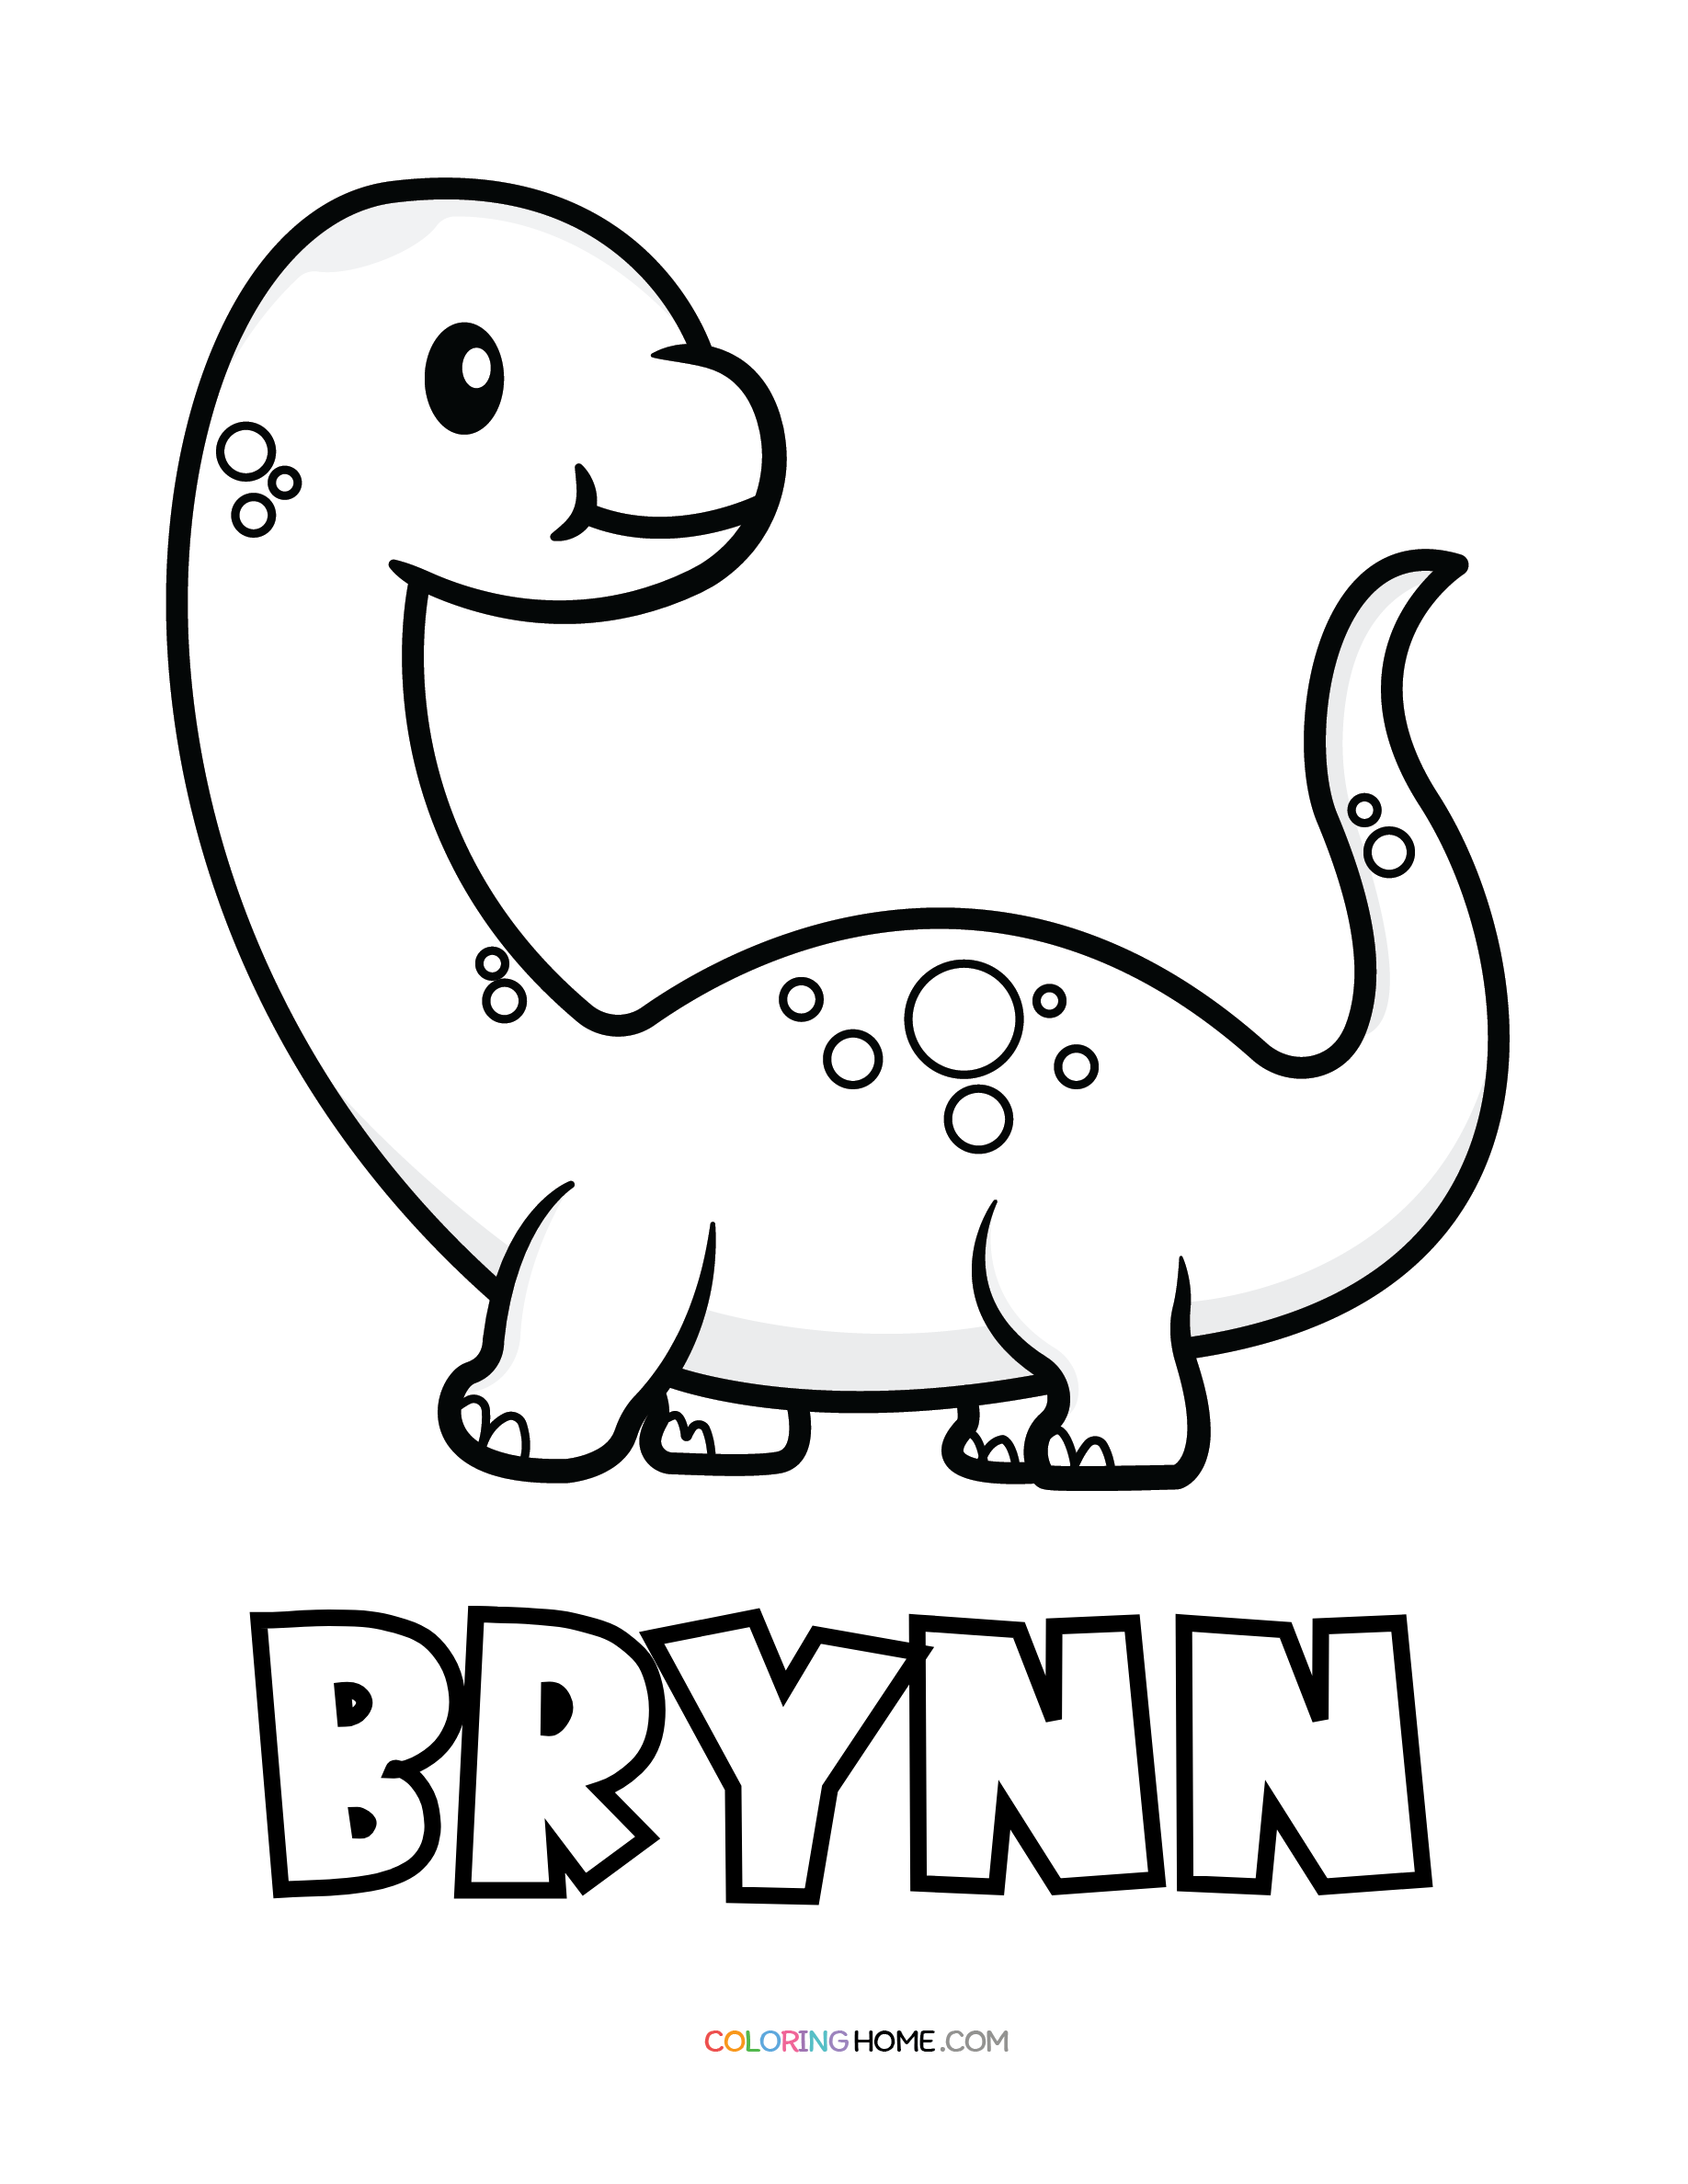 Brynn dinosaur coloring page